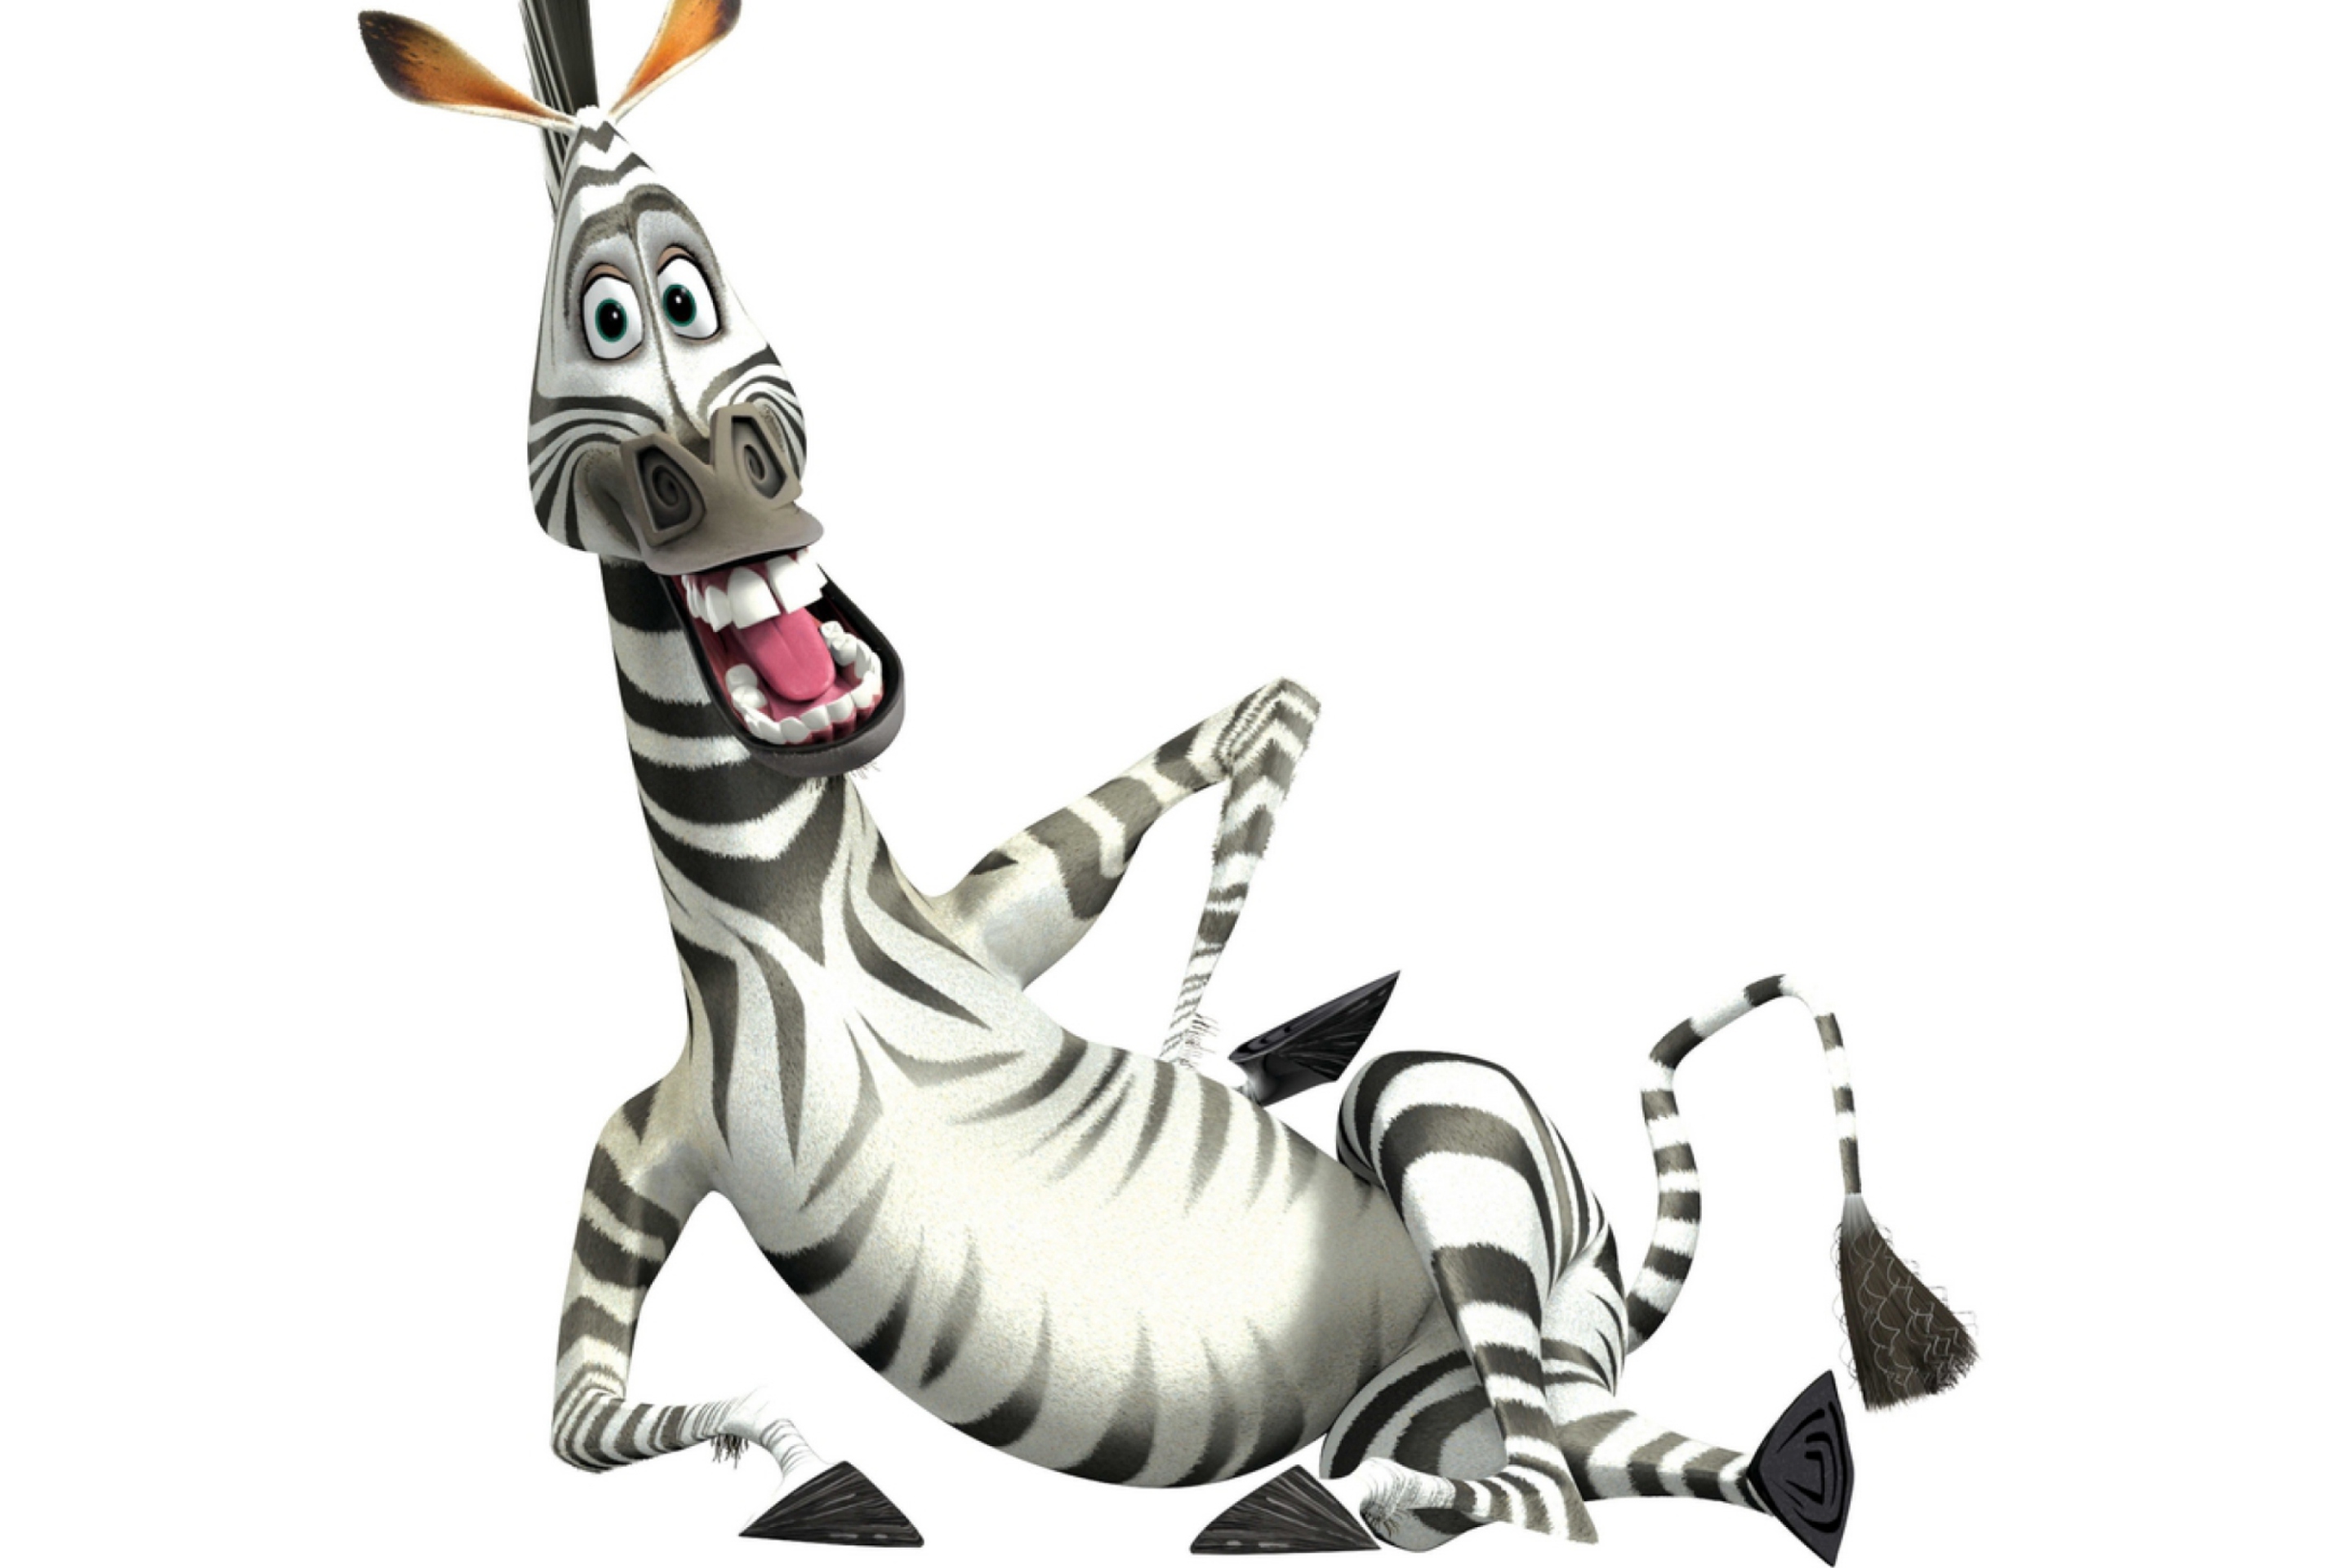 Мадагаскар 3 Марти клоун мультфильм цирк зебра скачать